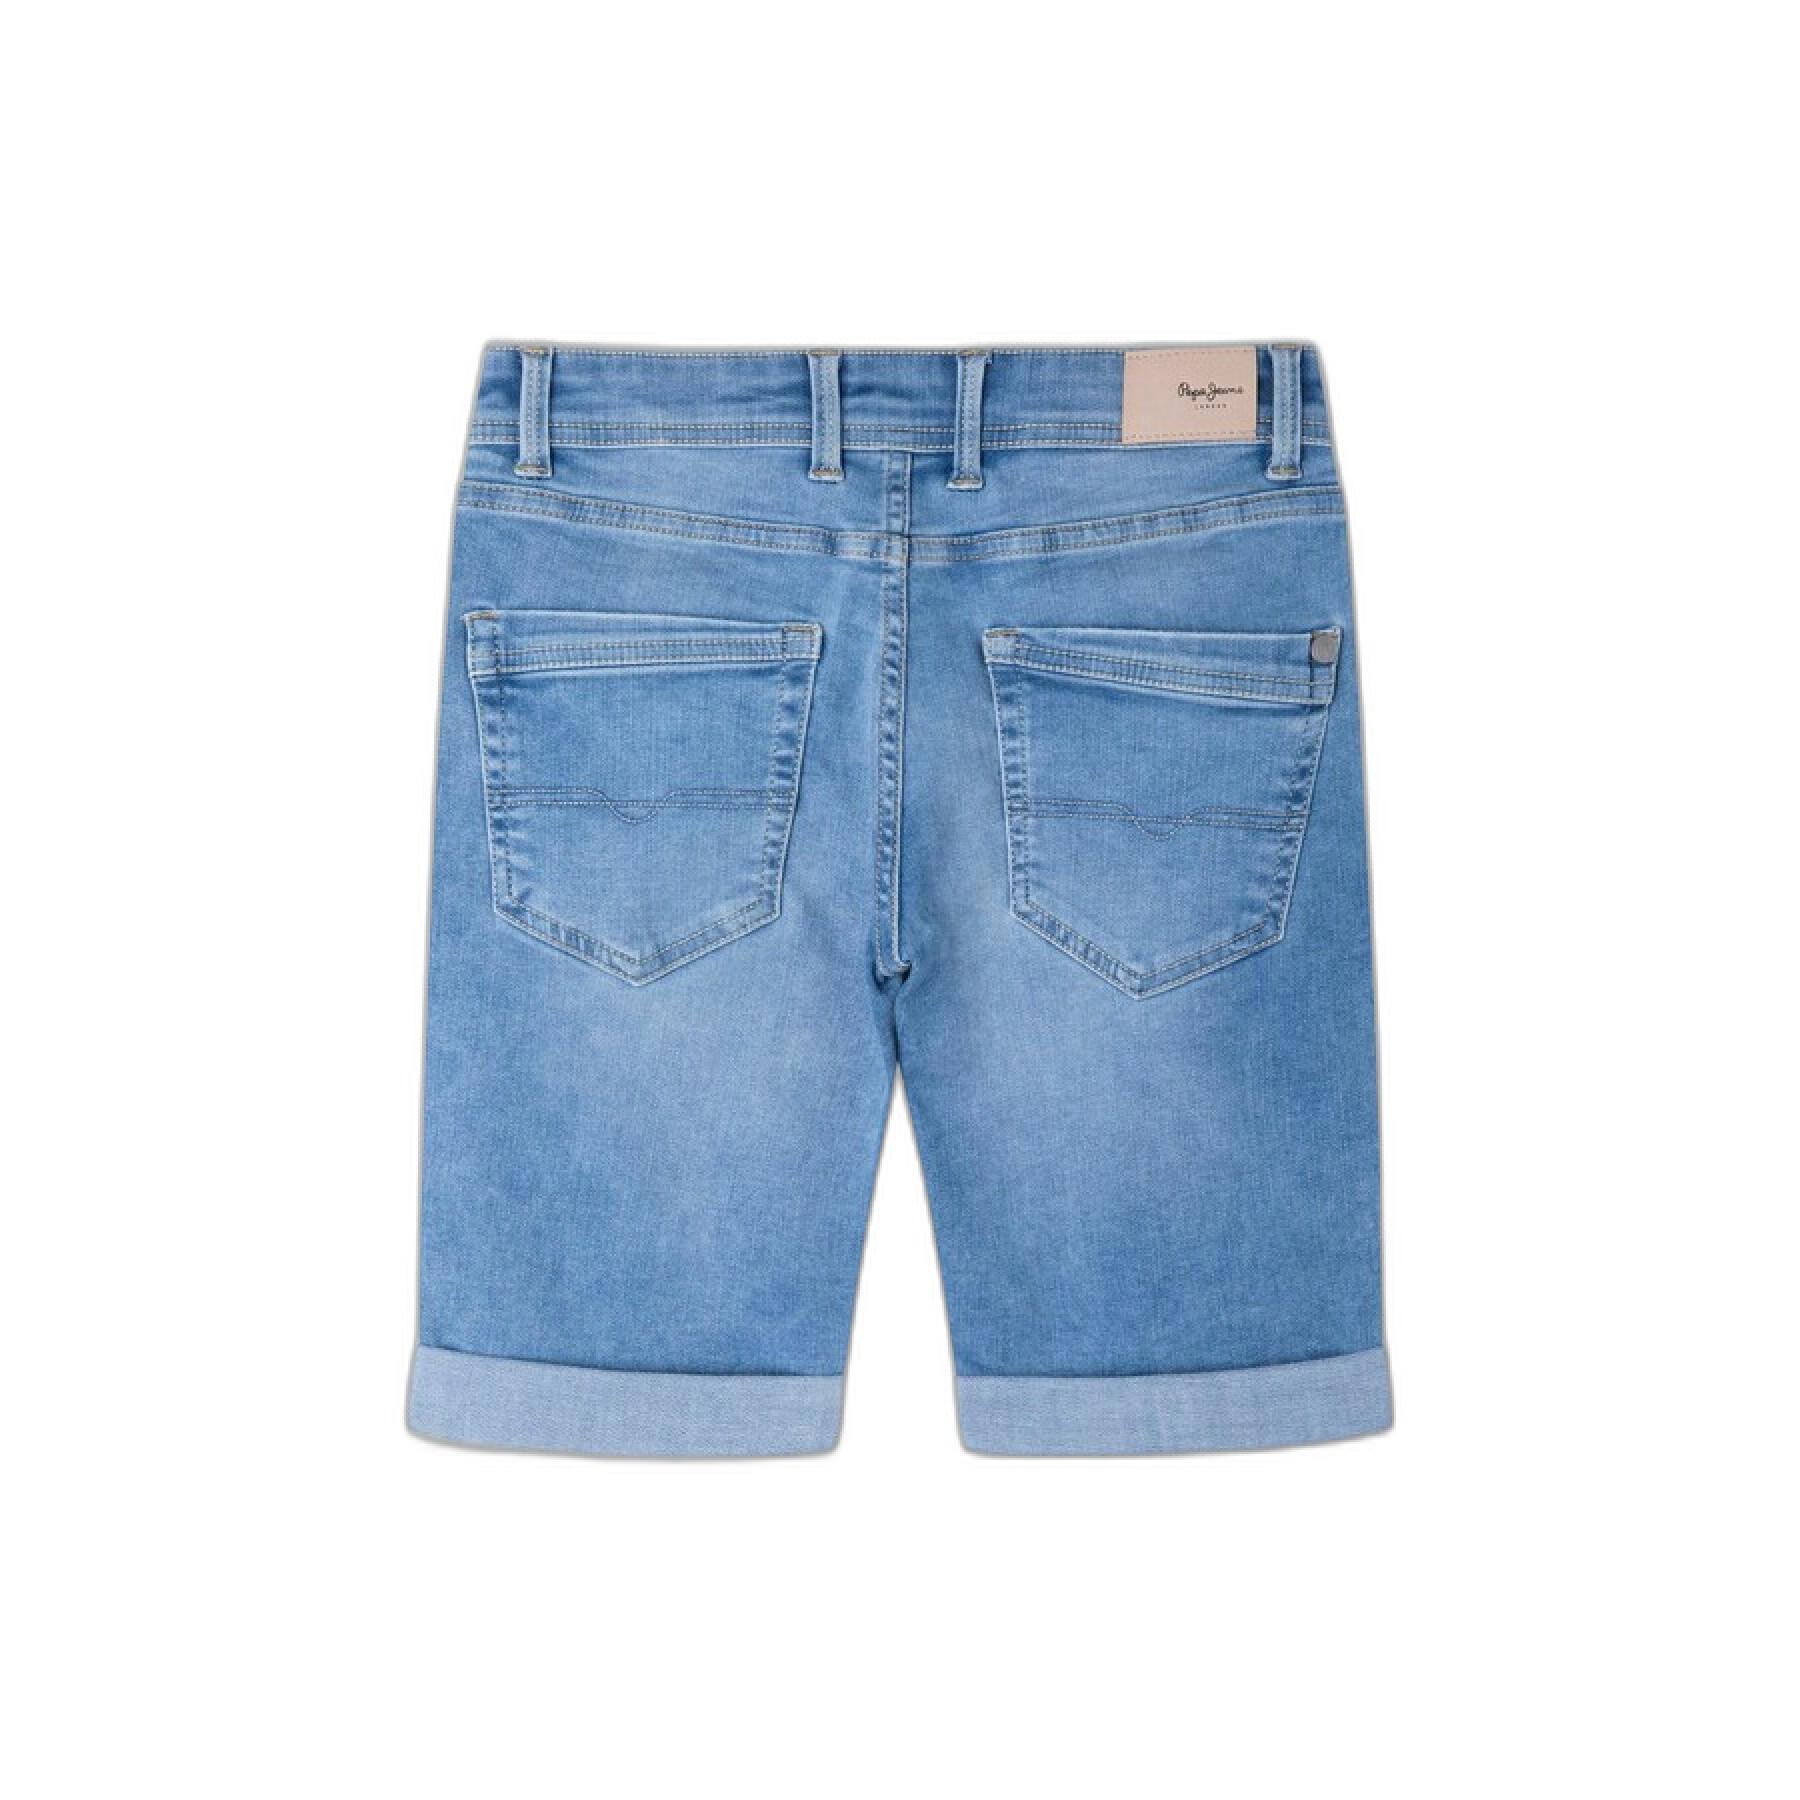 Bermuda-Shorts für Kinder Pepe Jeans Becket